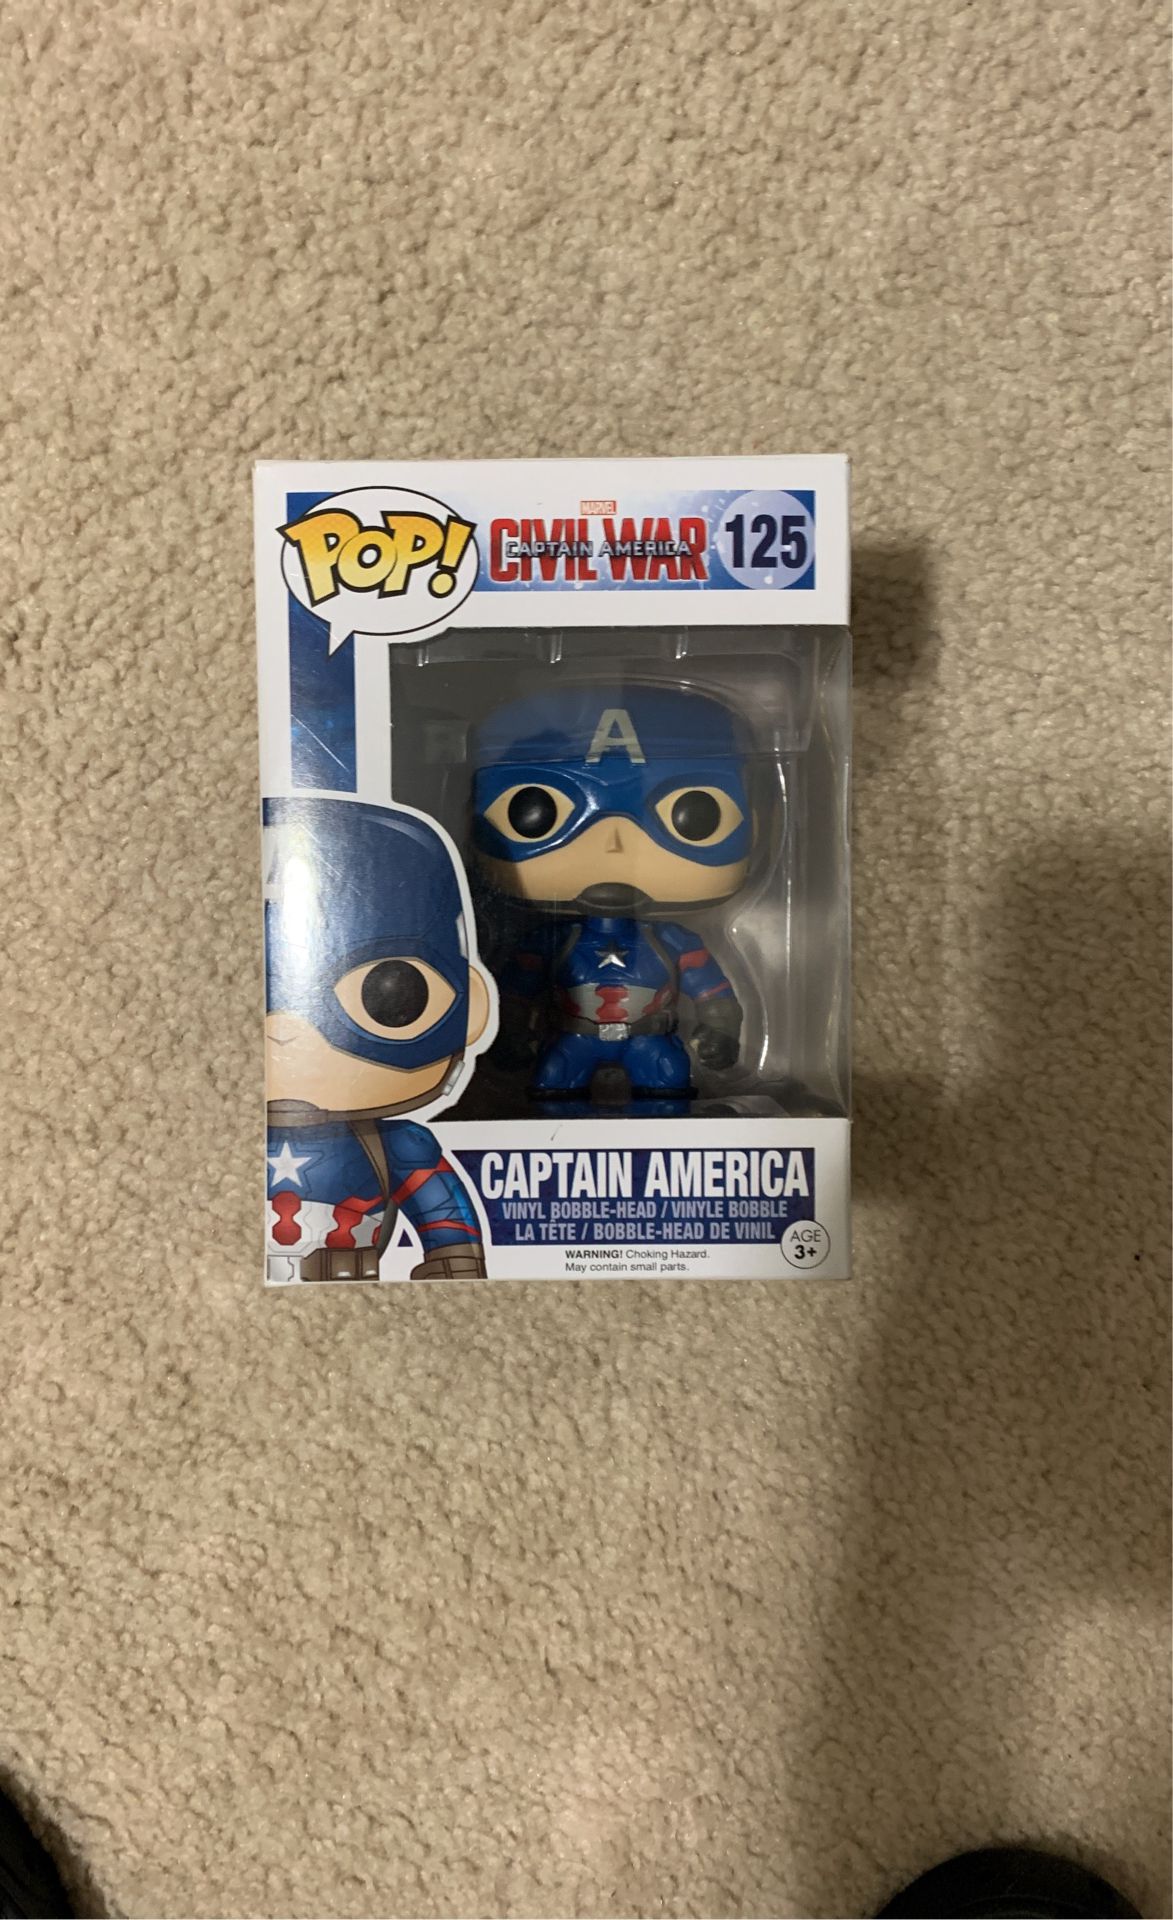 Captain America Civil War Funko Pop